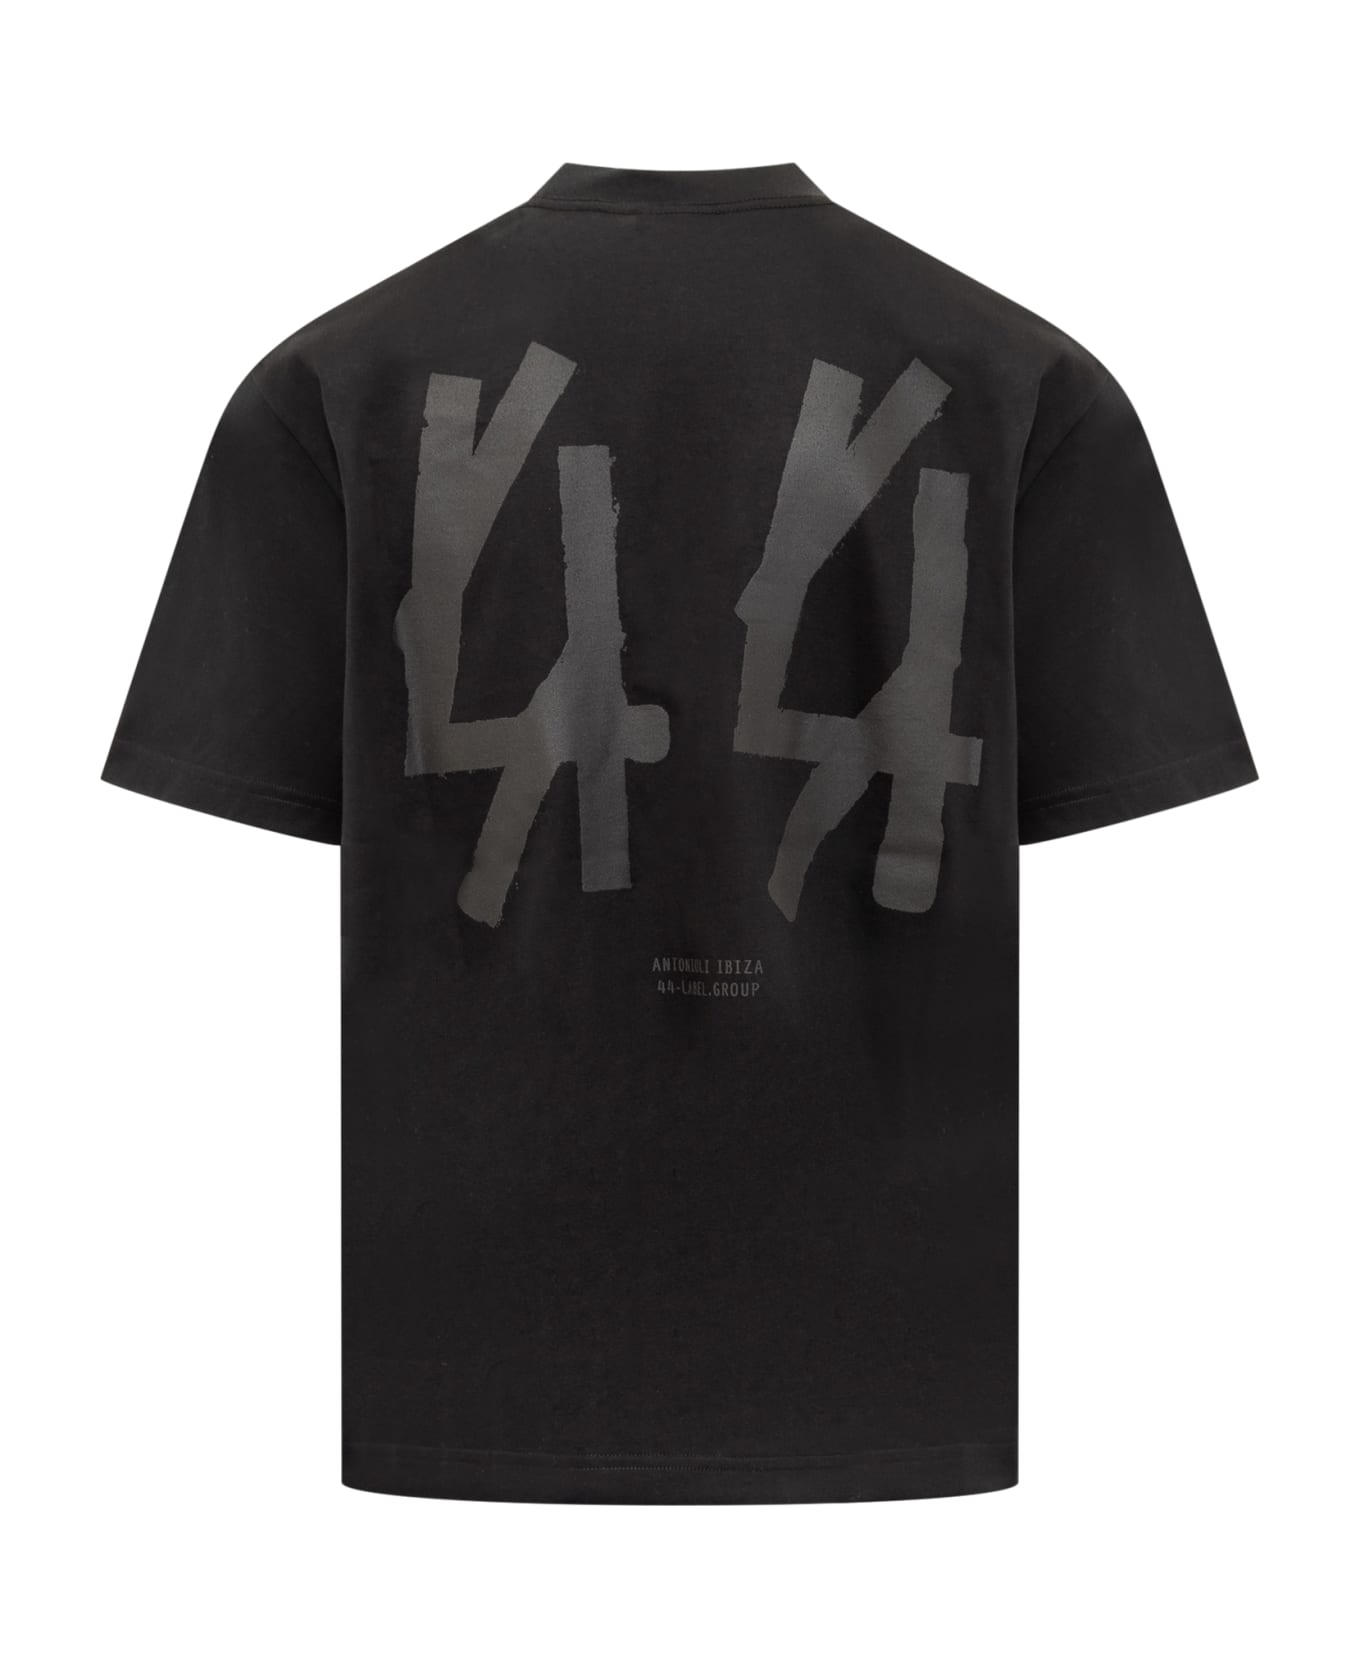 44 Label Group T-shirt With Ibz Print - BLACK-I LOVE IBZ